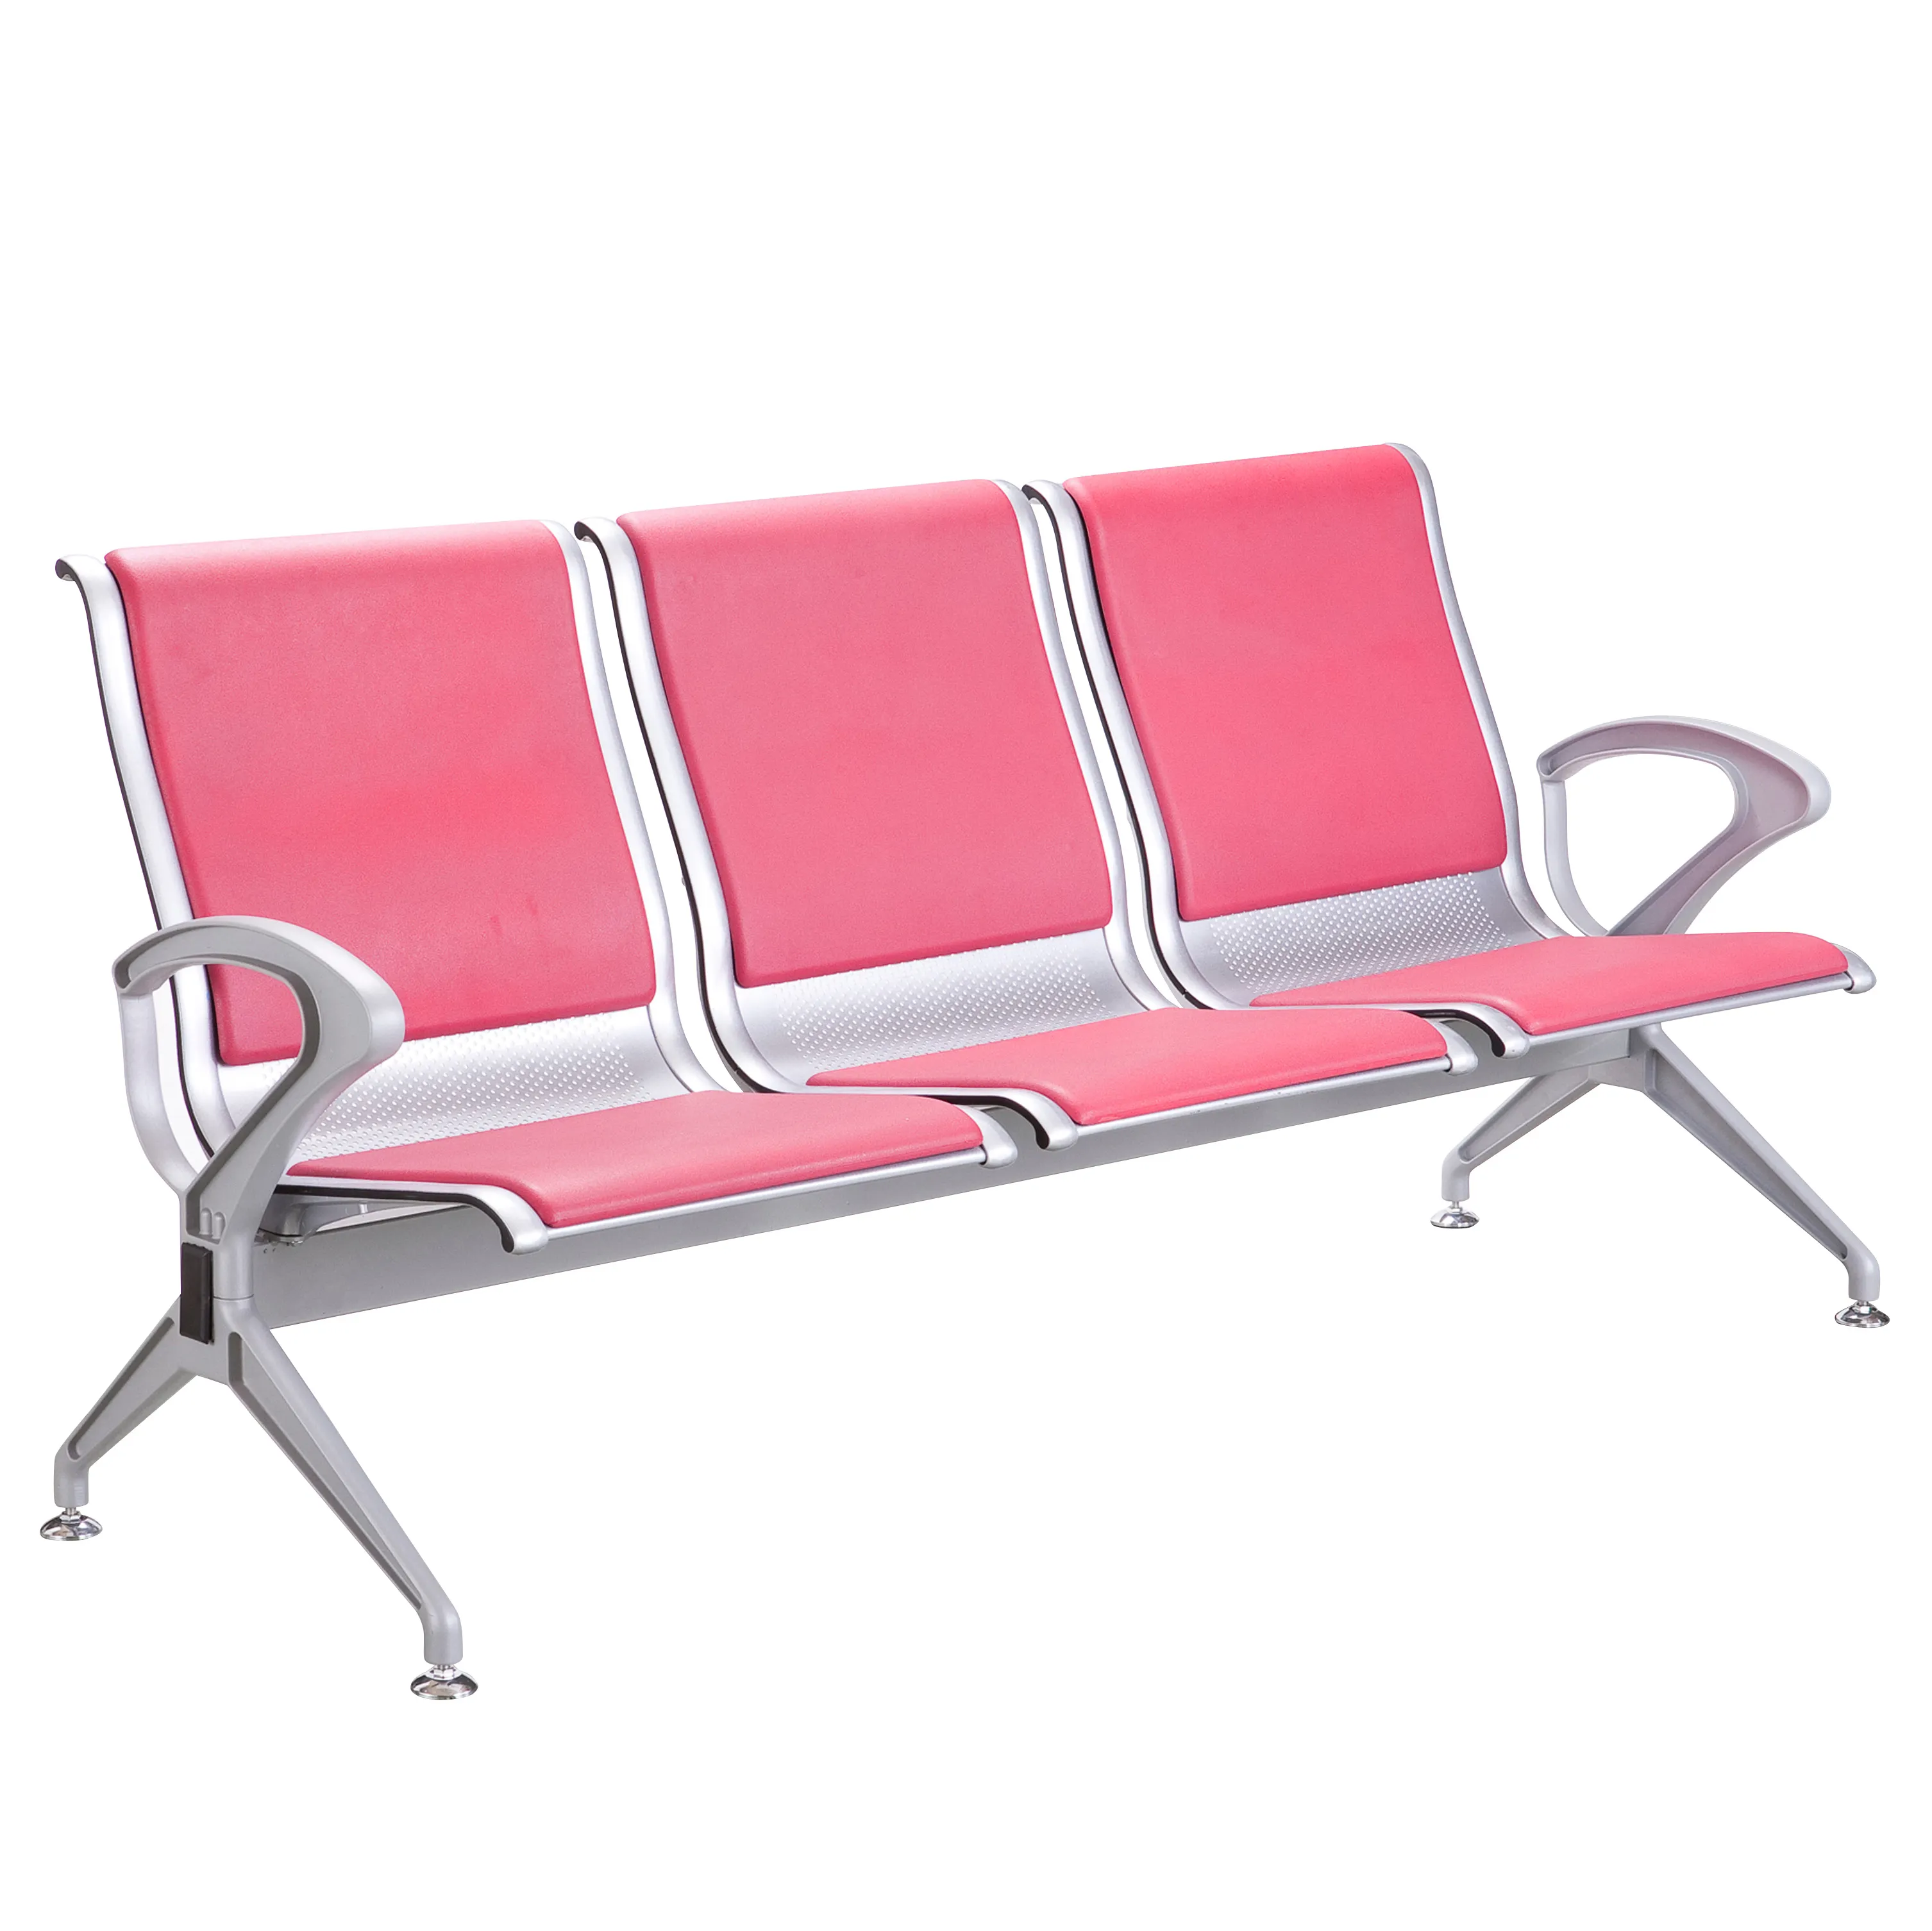 Silla Tandem de 3 asientos, sillón de sala de espera para clínica hospitalaria moderna, de PU, color rosa, gran oferta